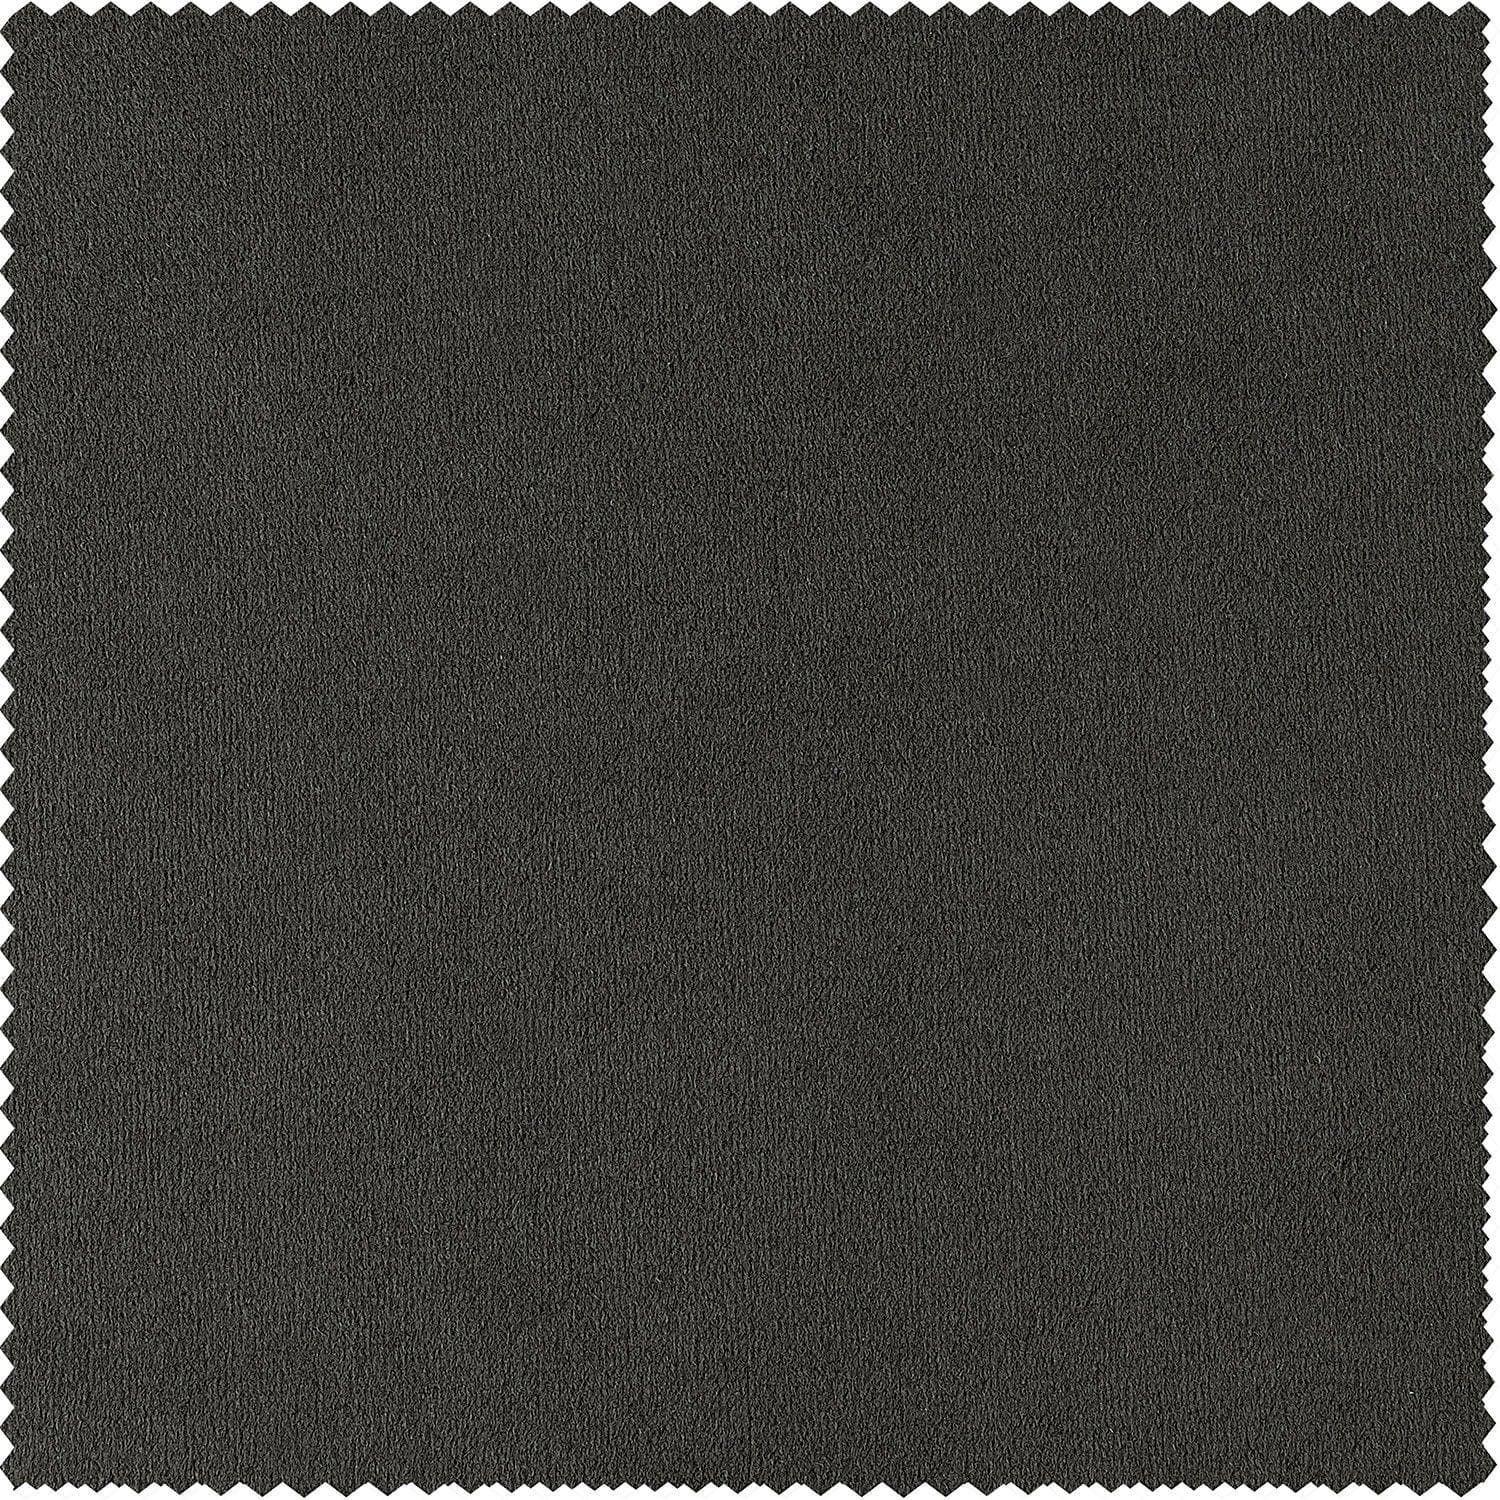 Gunmetal Grey Signature Velvet Blackout Curtain